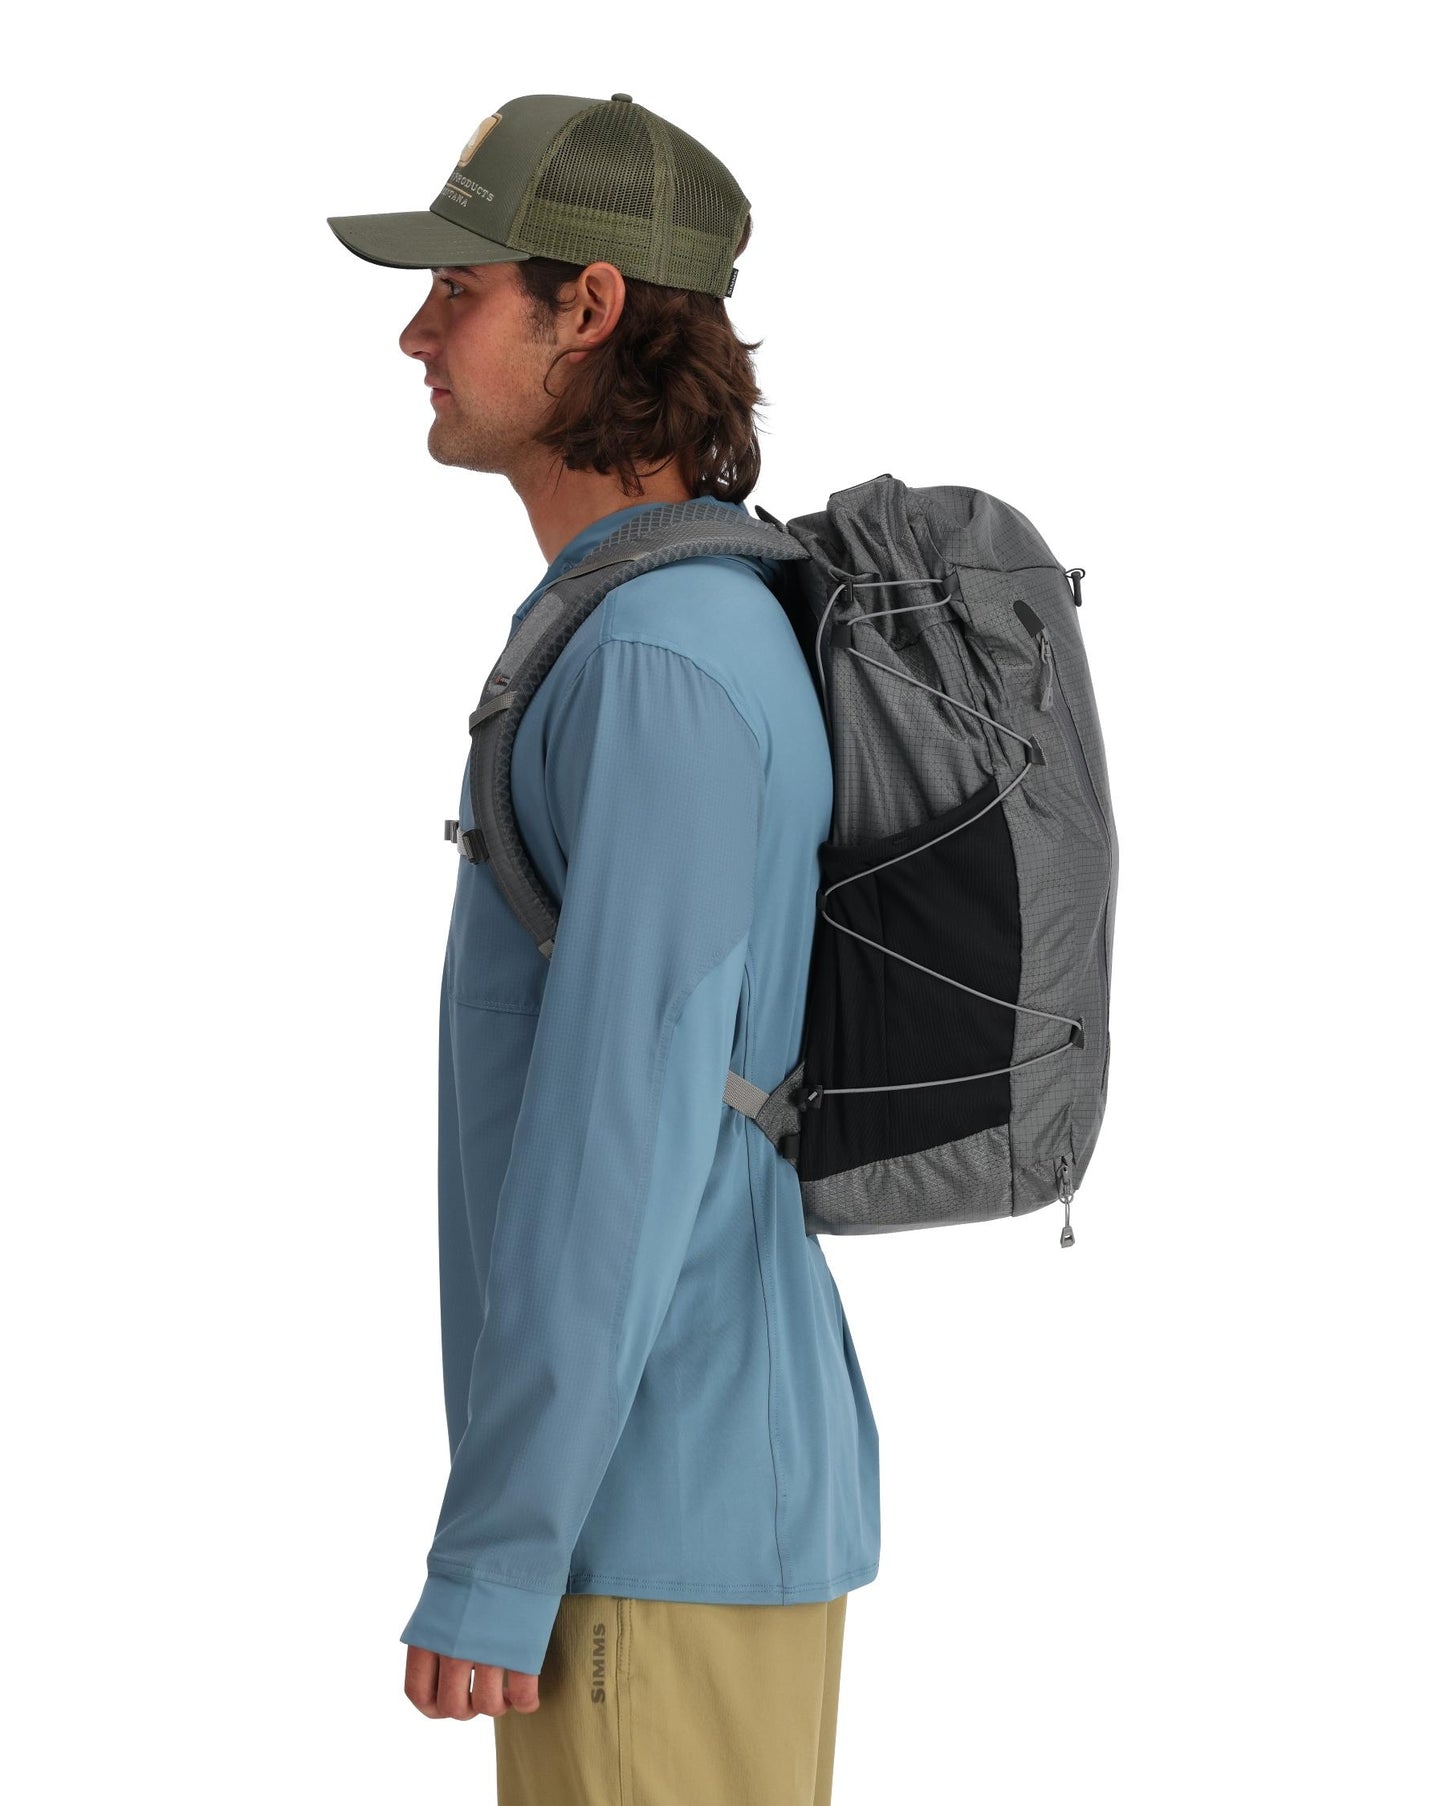 13965-040-Flyweight-Backpack-Model